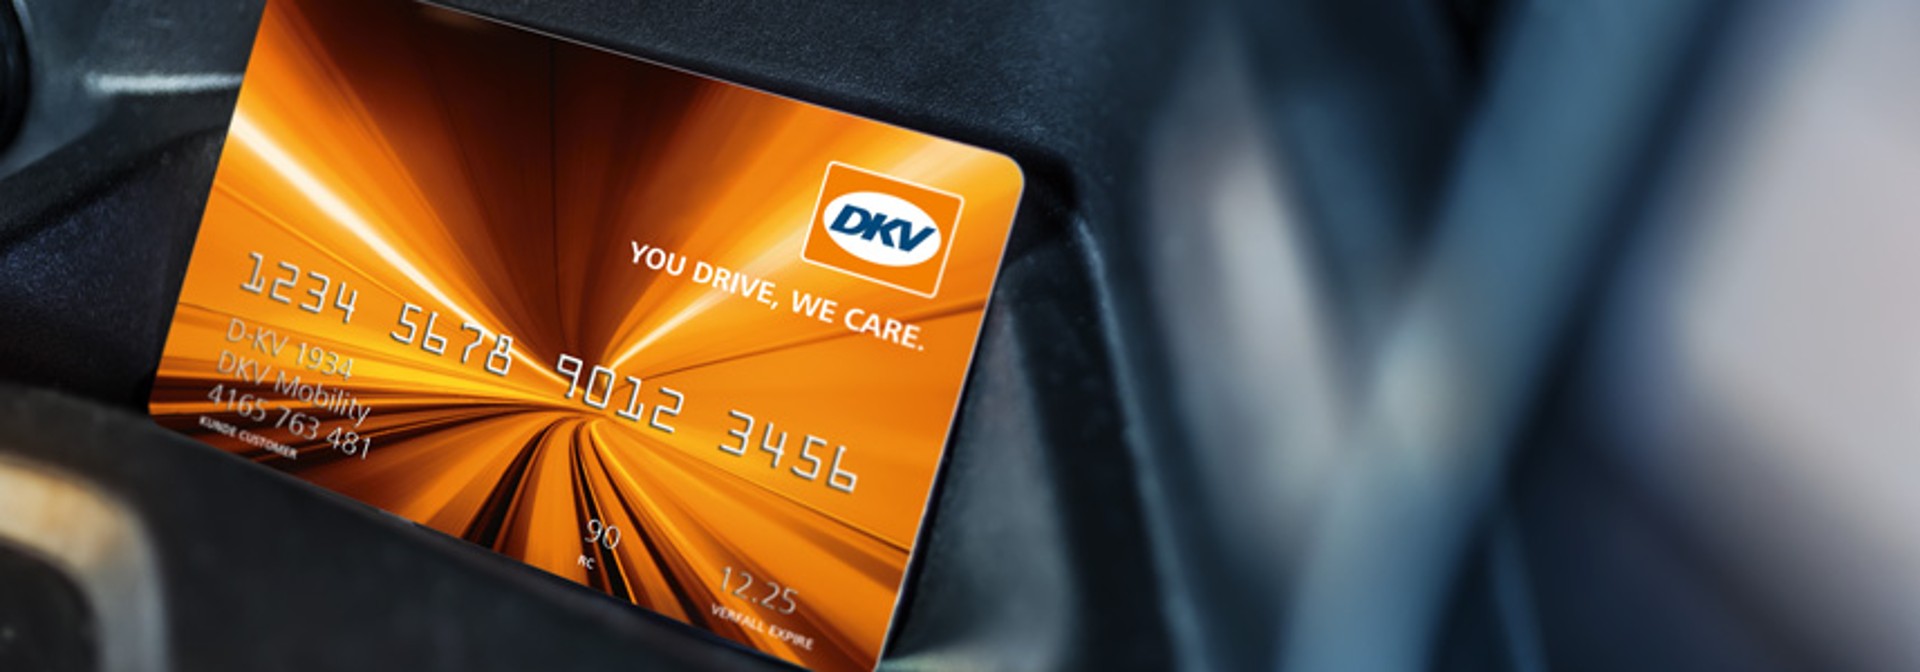 Fokus auf DKV Card im Auto